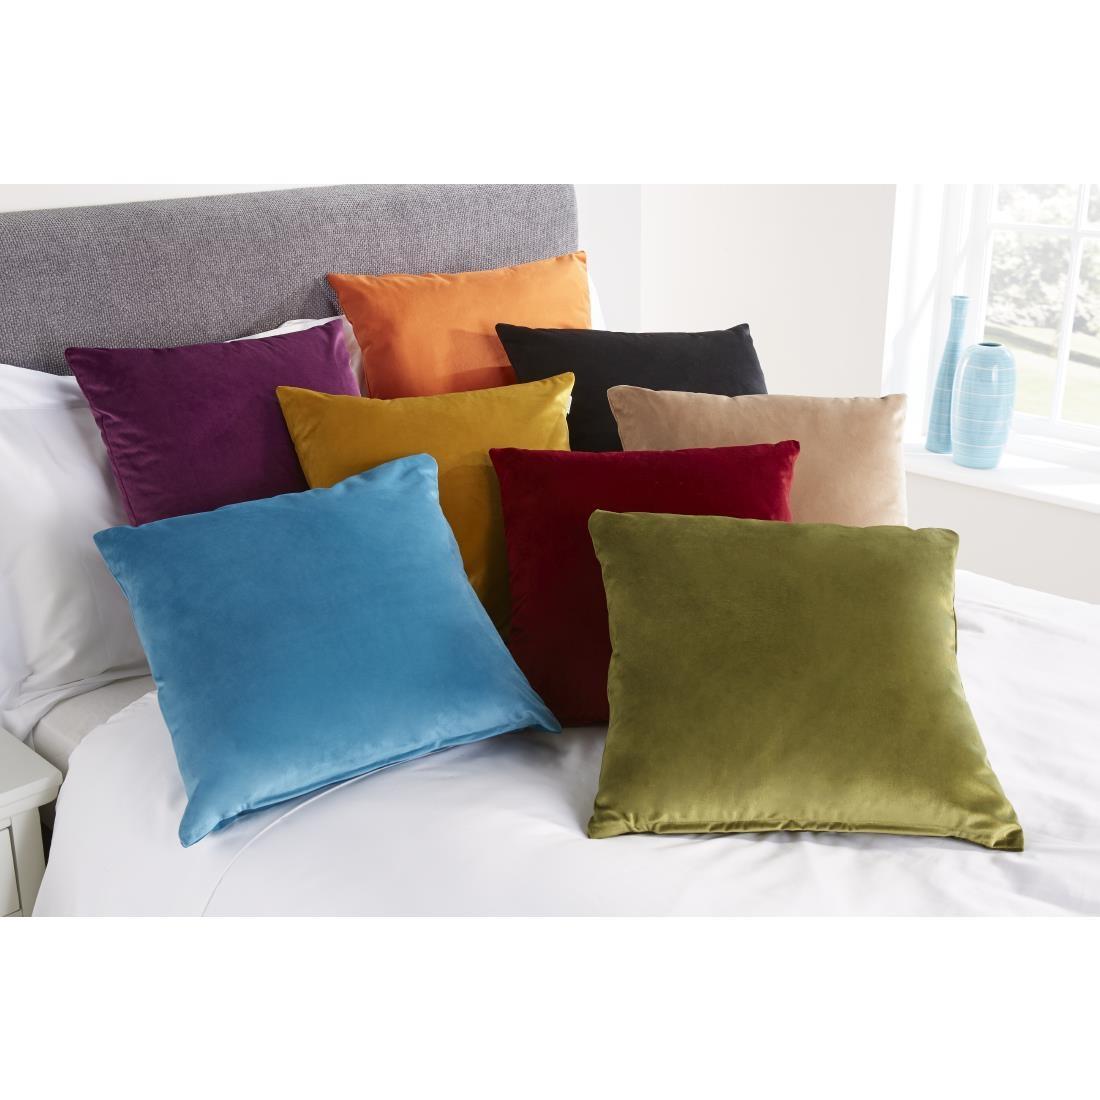 Mitre Comfort D'Arcy Unpiped Cushion Orange - HB799  - 2